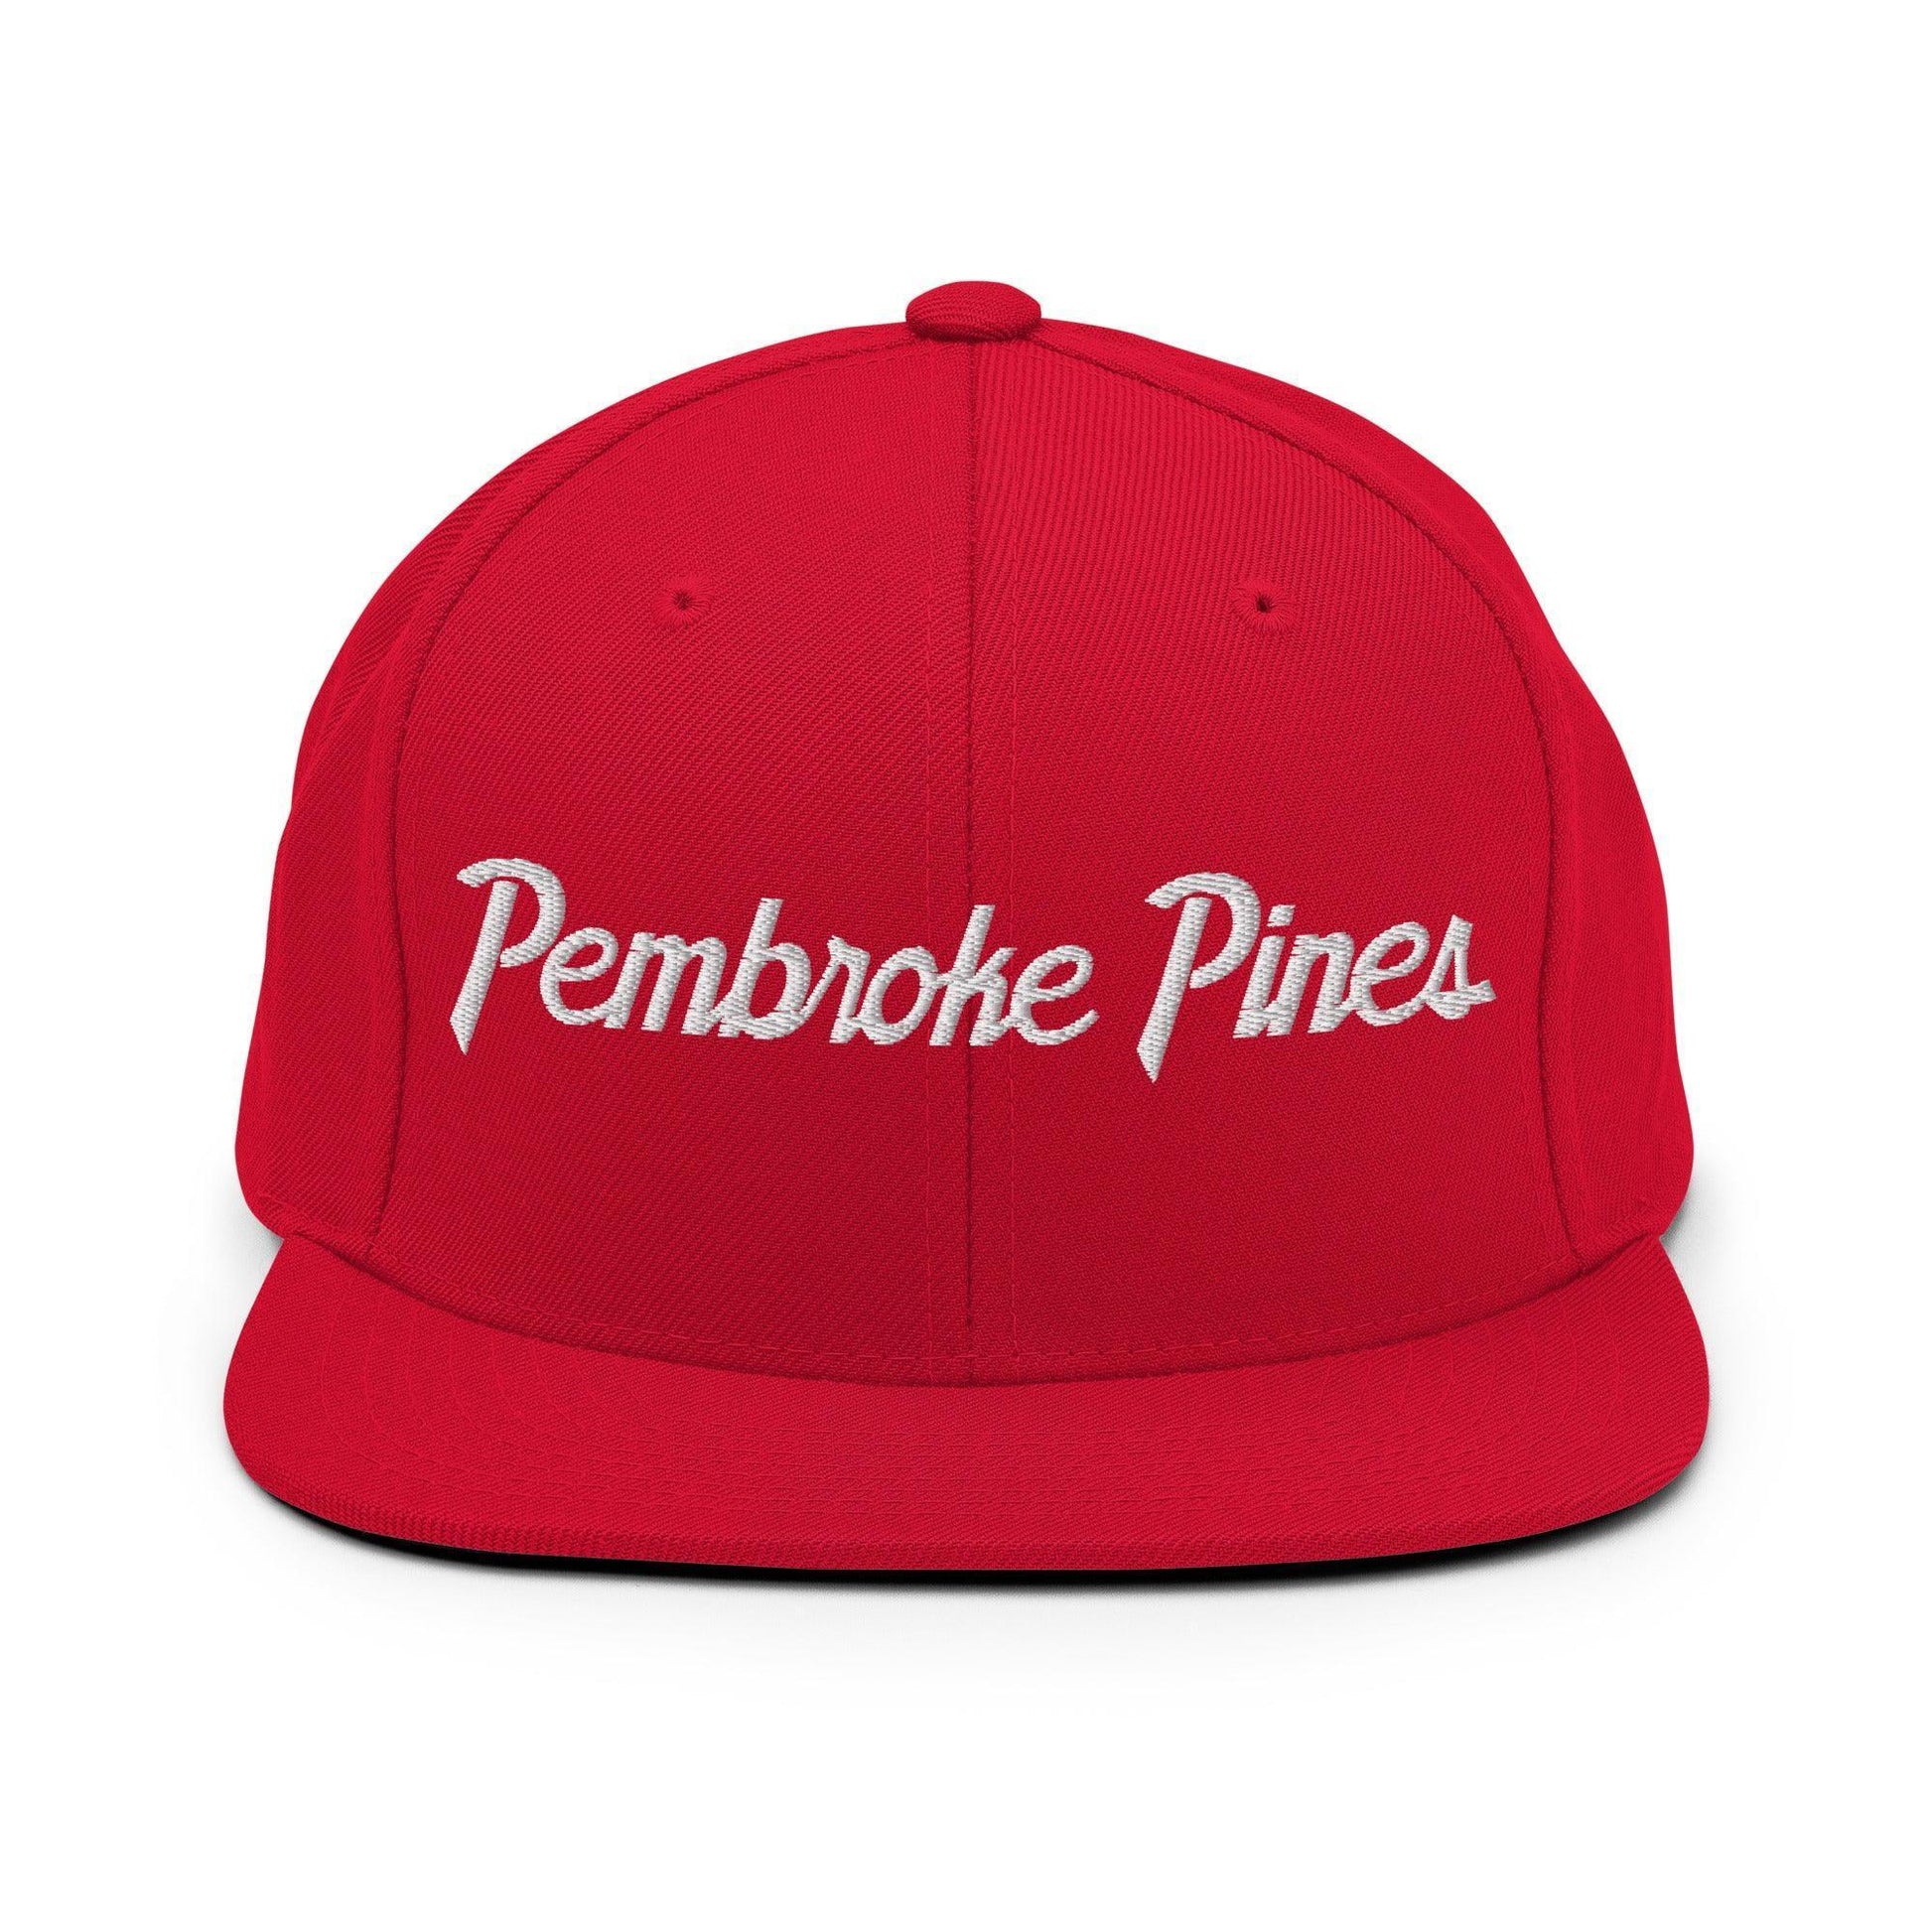 Pembroke Pines Script Snapback Hat Red